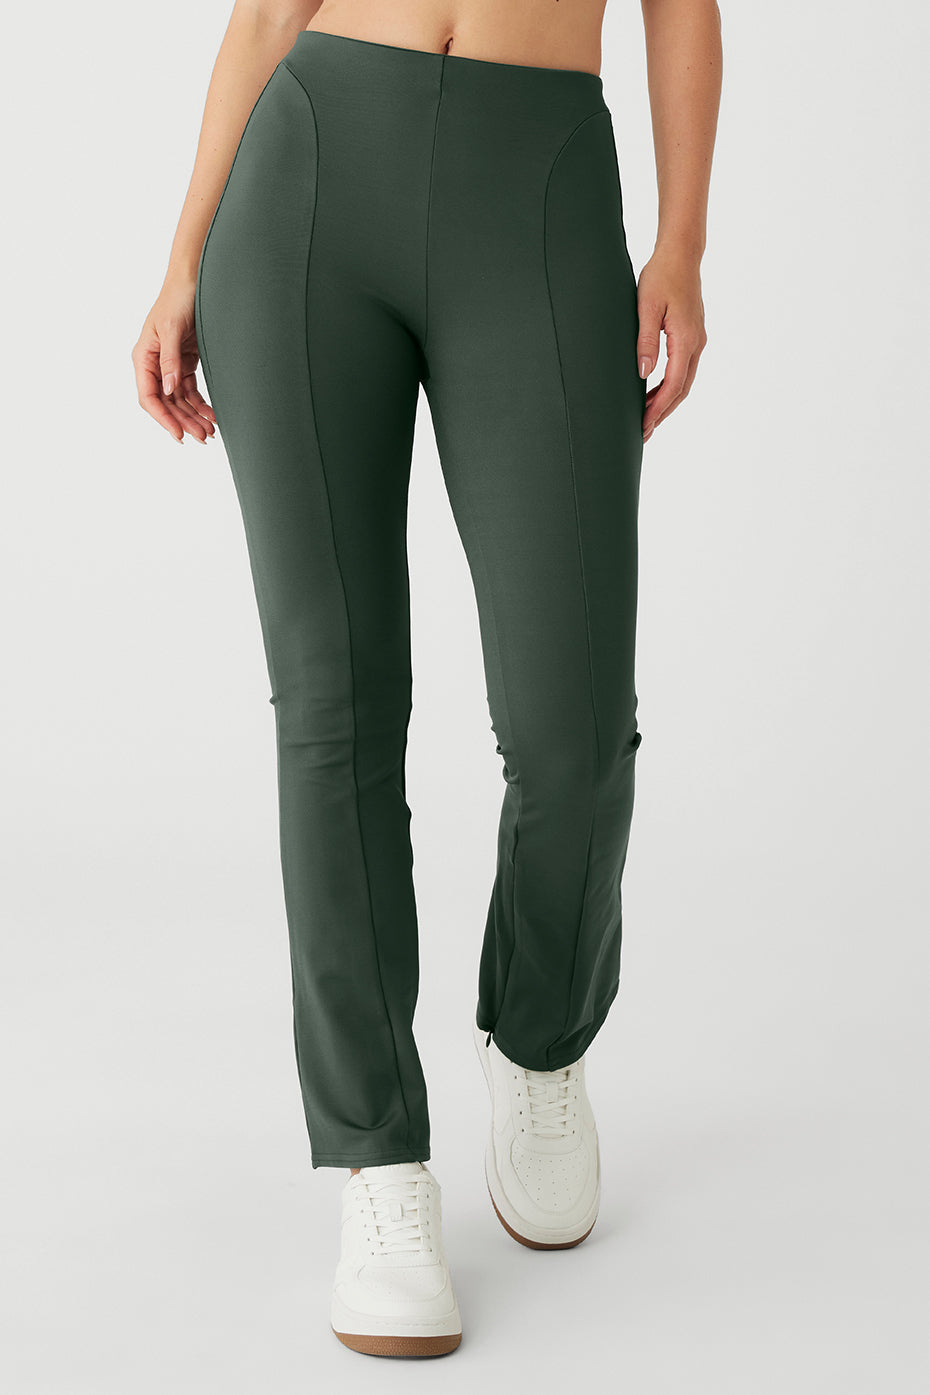 Pants & Jumpsuits, Lululemon Dark Green Leggings Capris Size 6